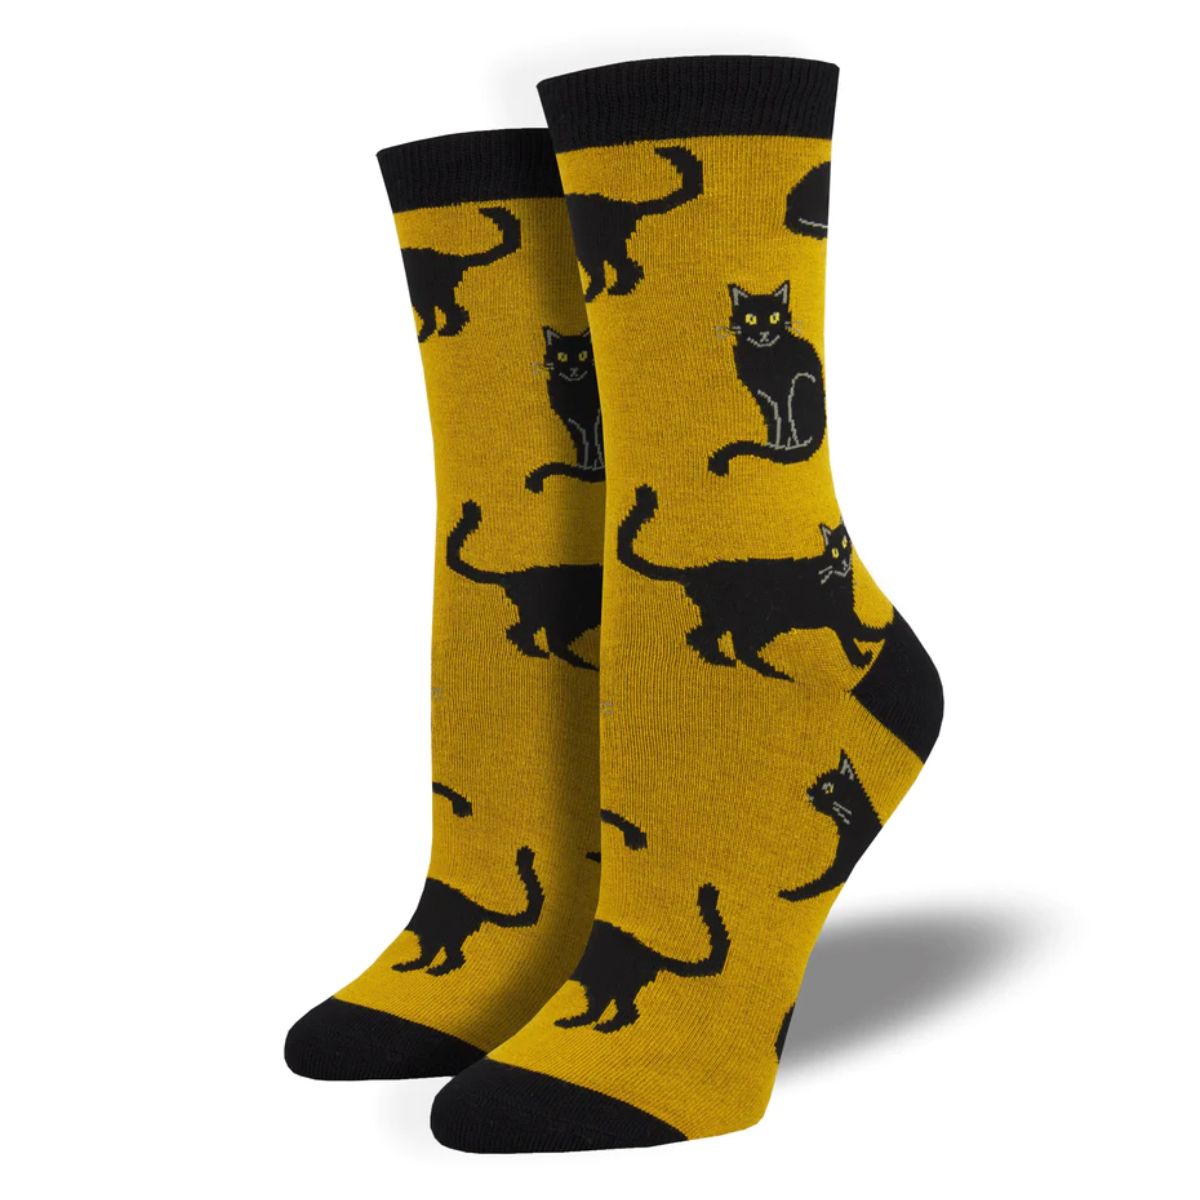 black cat socks a pair of yellow crew socks with black cat print